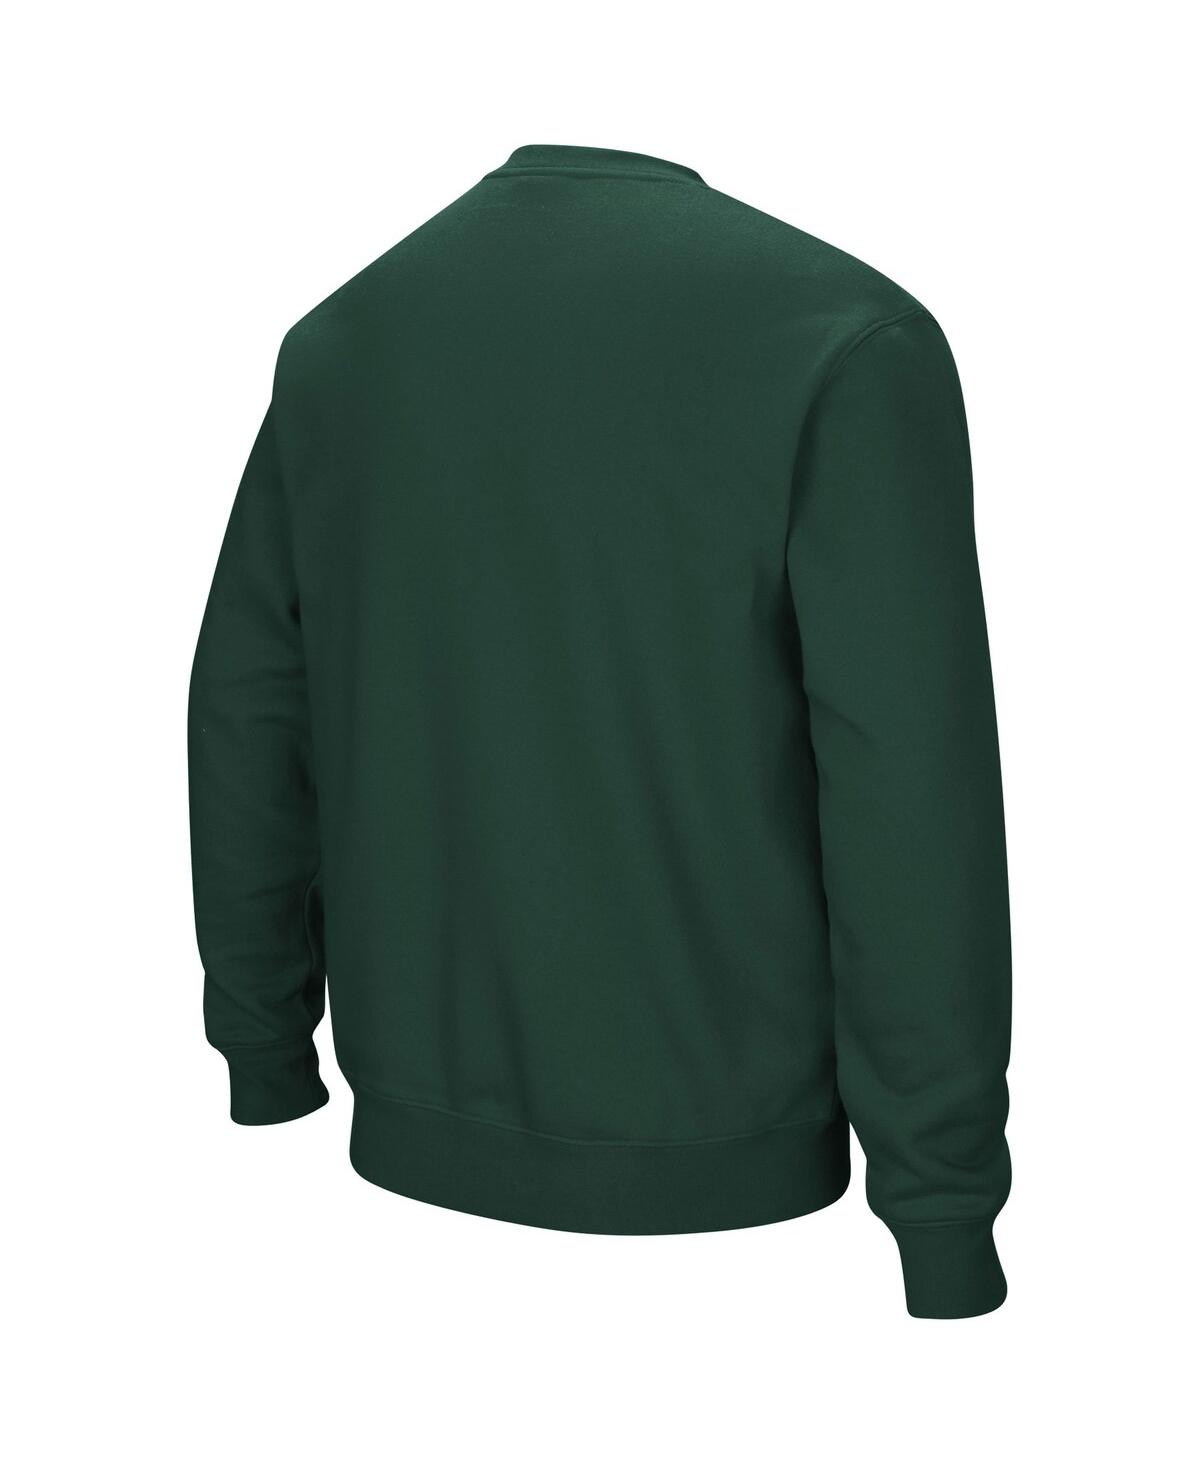 Shop Colosseum Men's  Green Baylor Bears Arch & Logo Pullover Sweatshirt